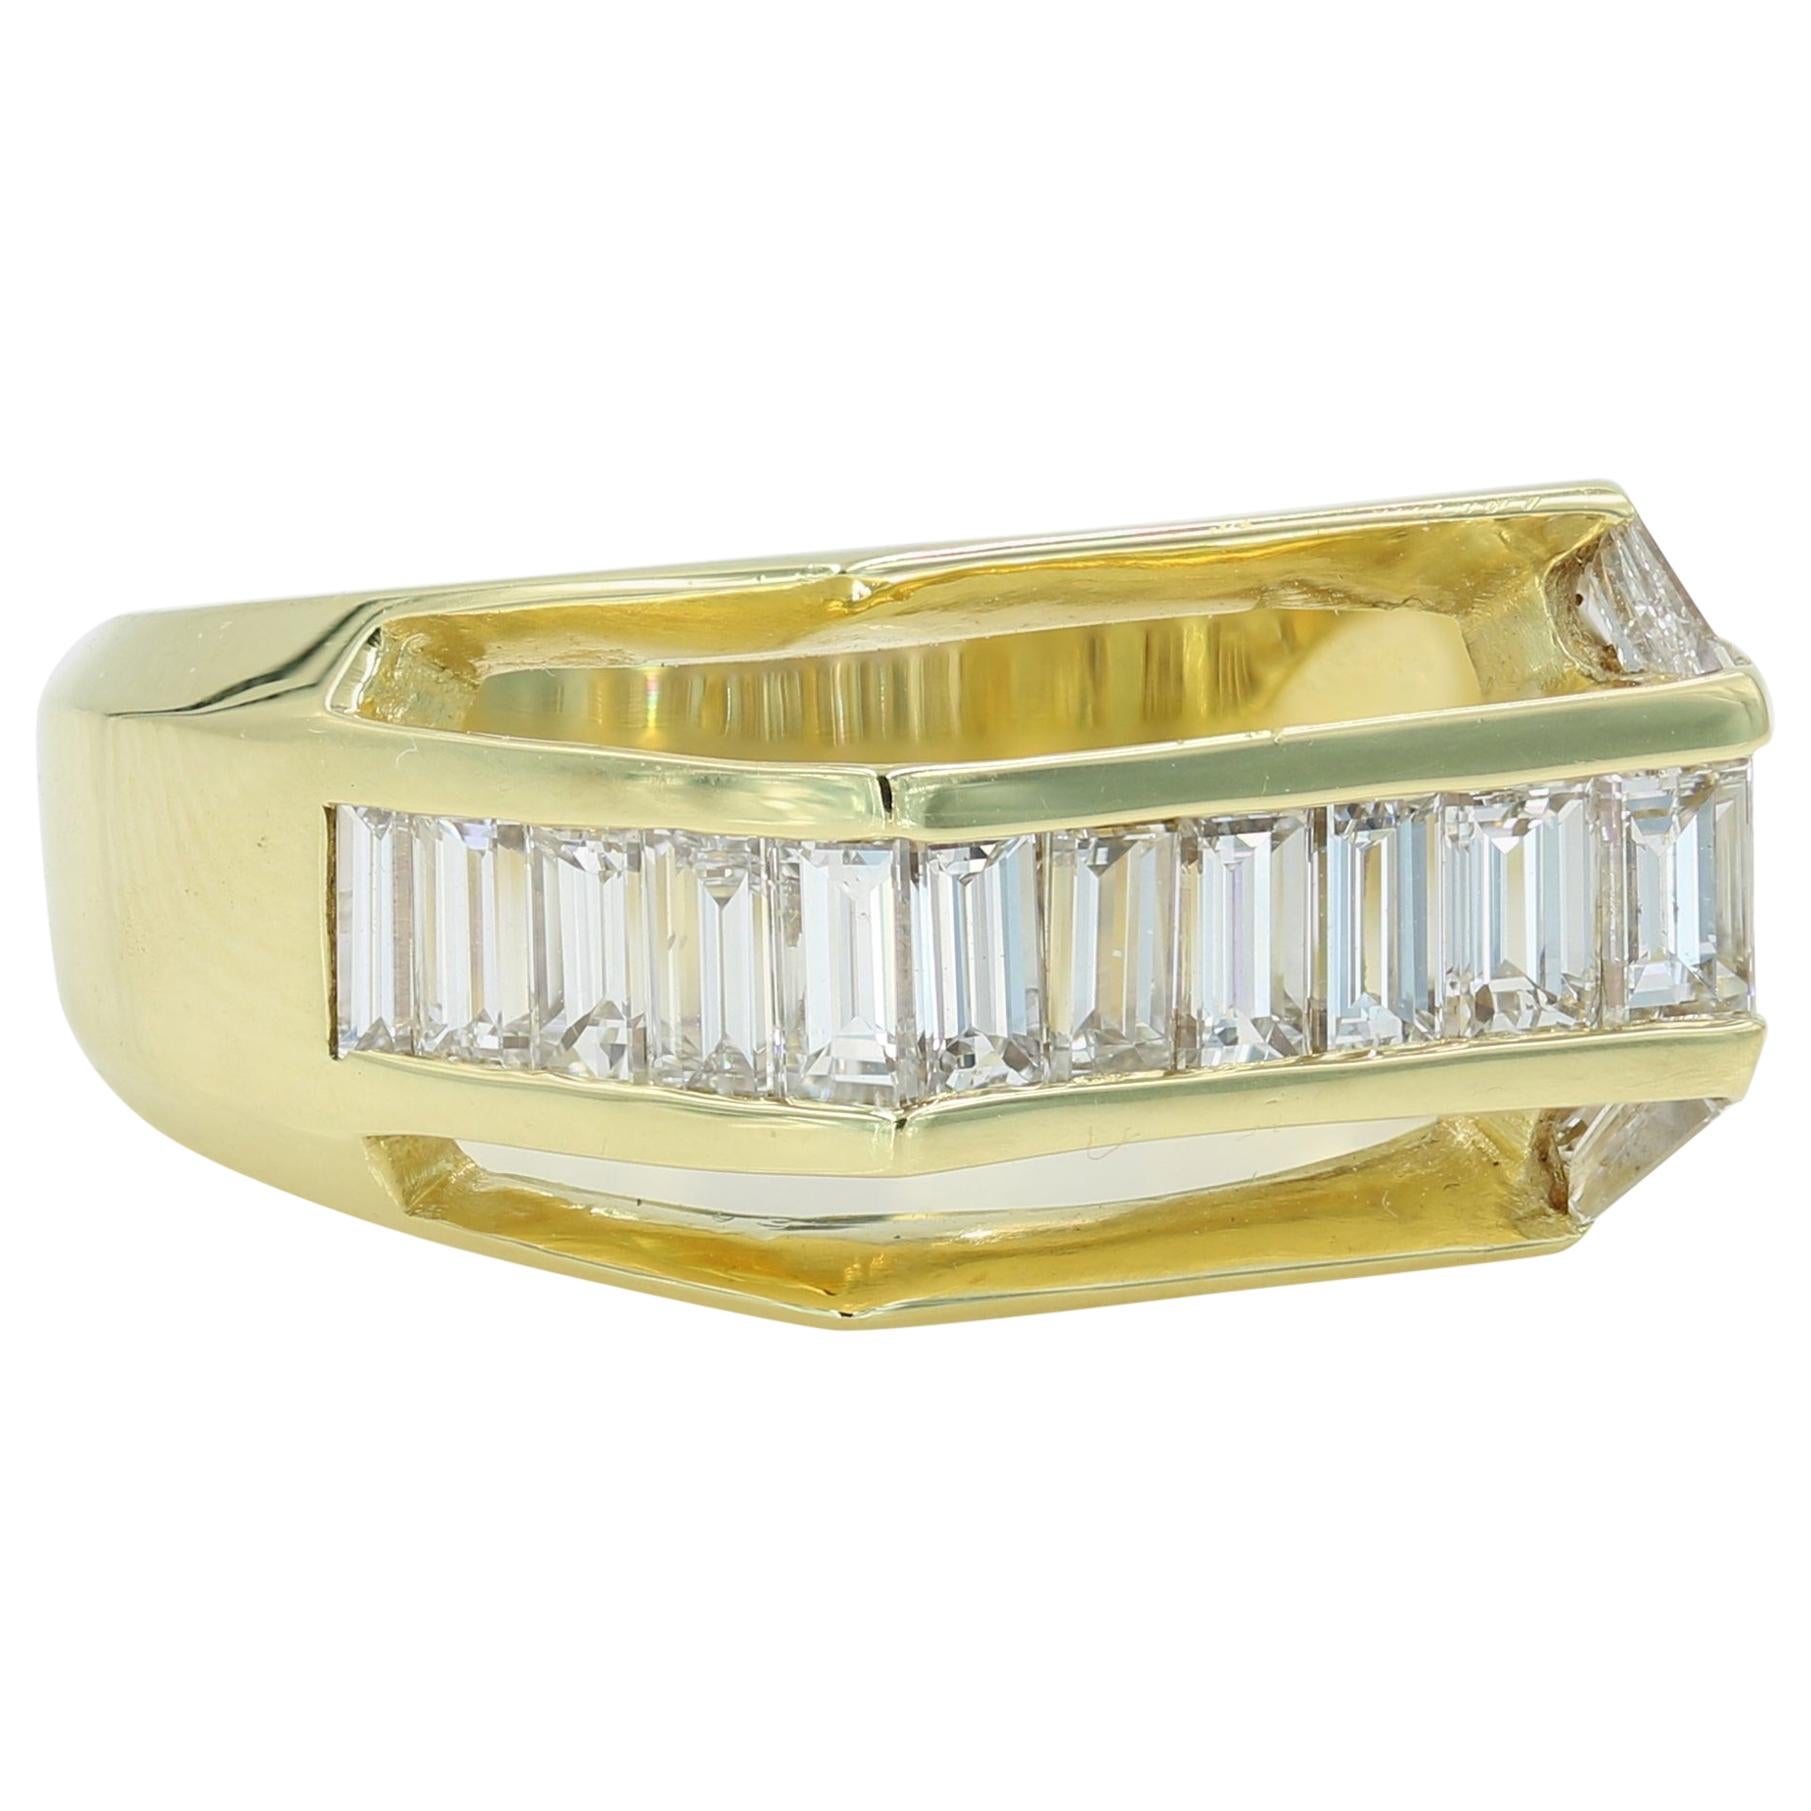 Lester Lampert Original Design Gent's Baguette Diamond Ring in 18 Karat Gold